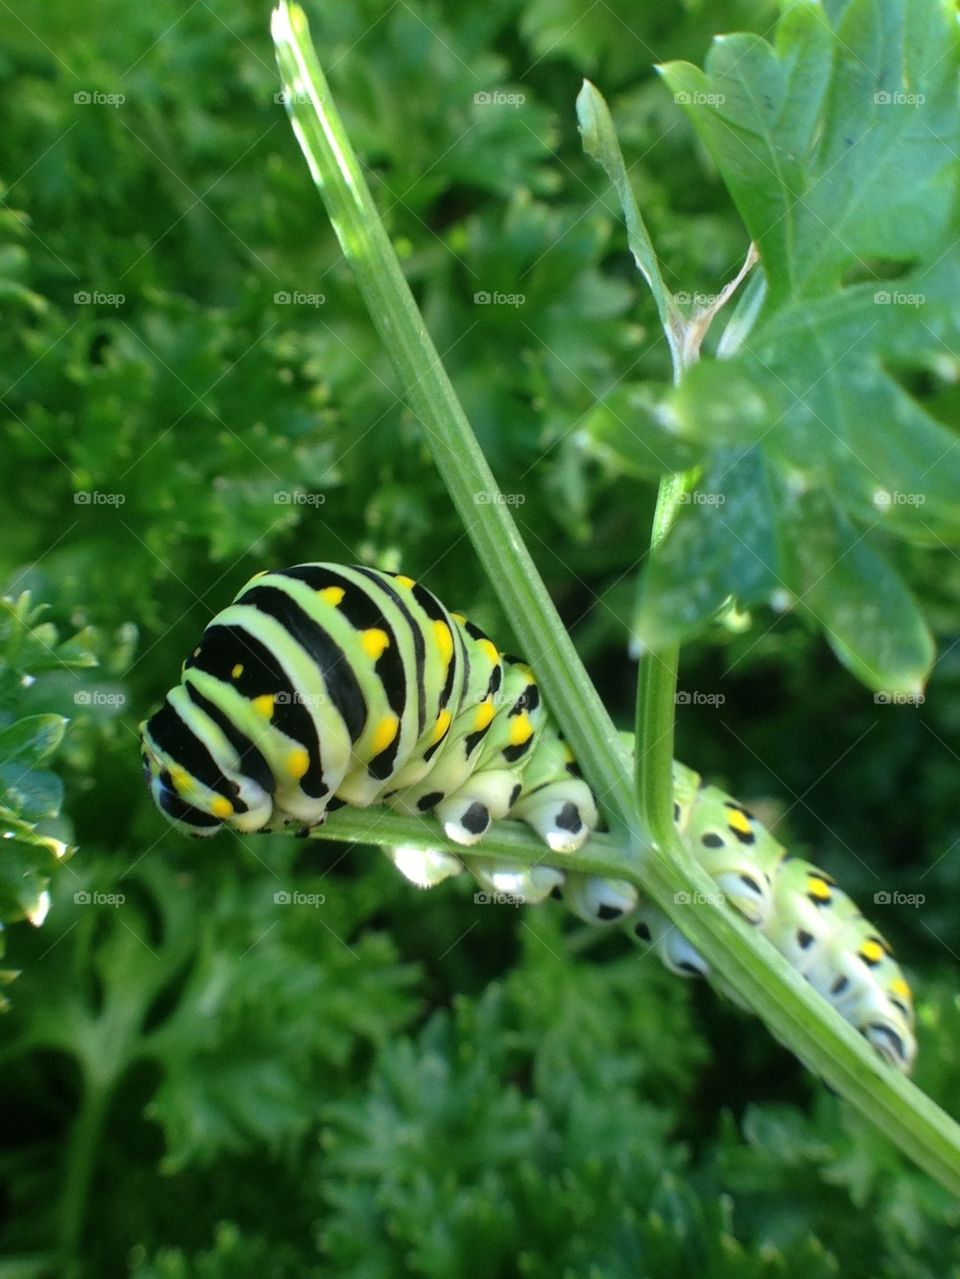 Caterpillar eating my garden